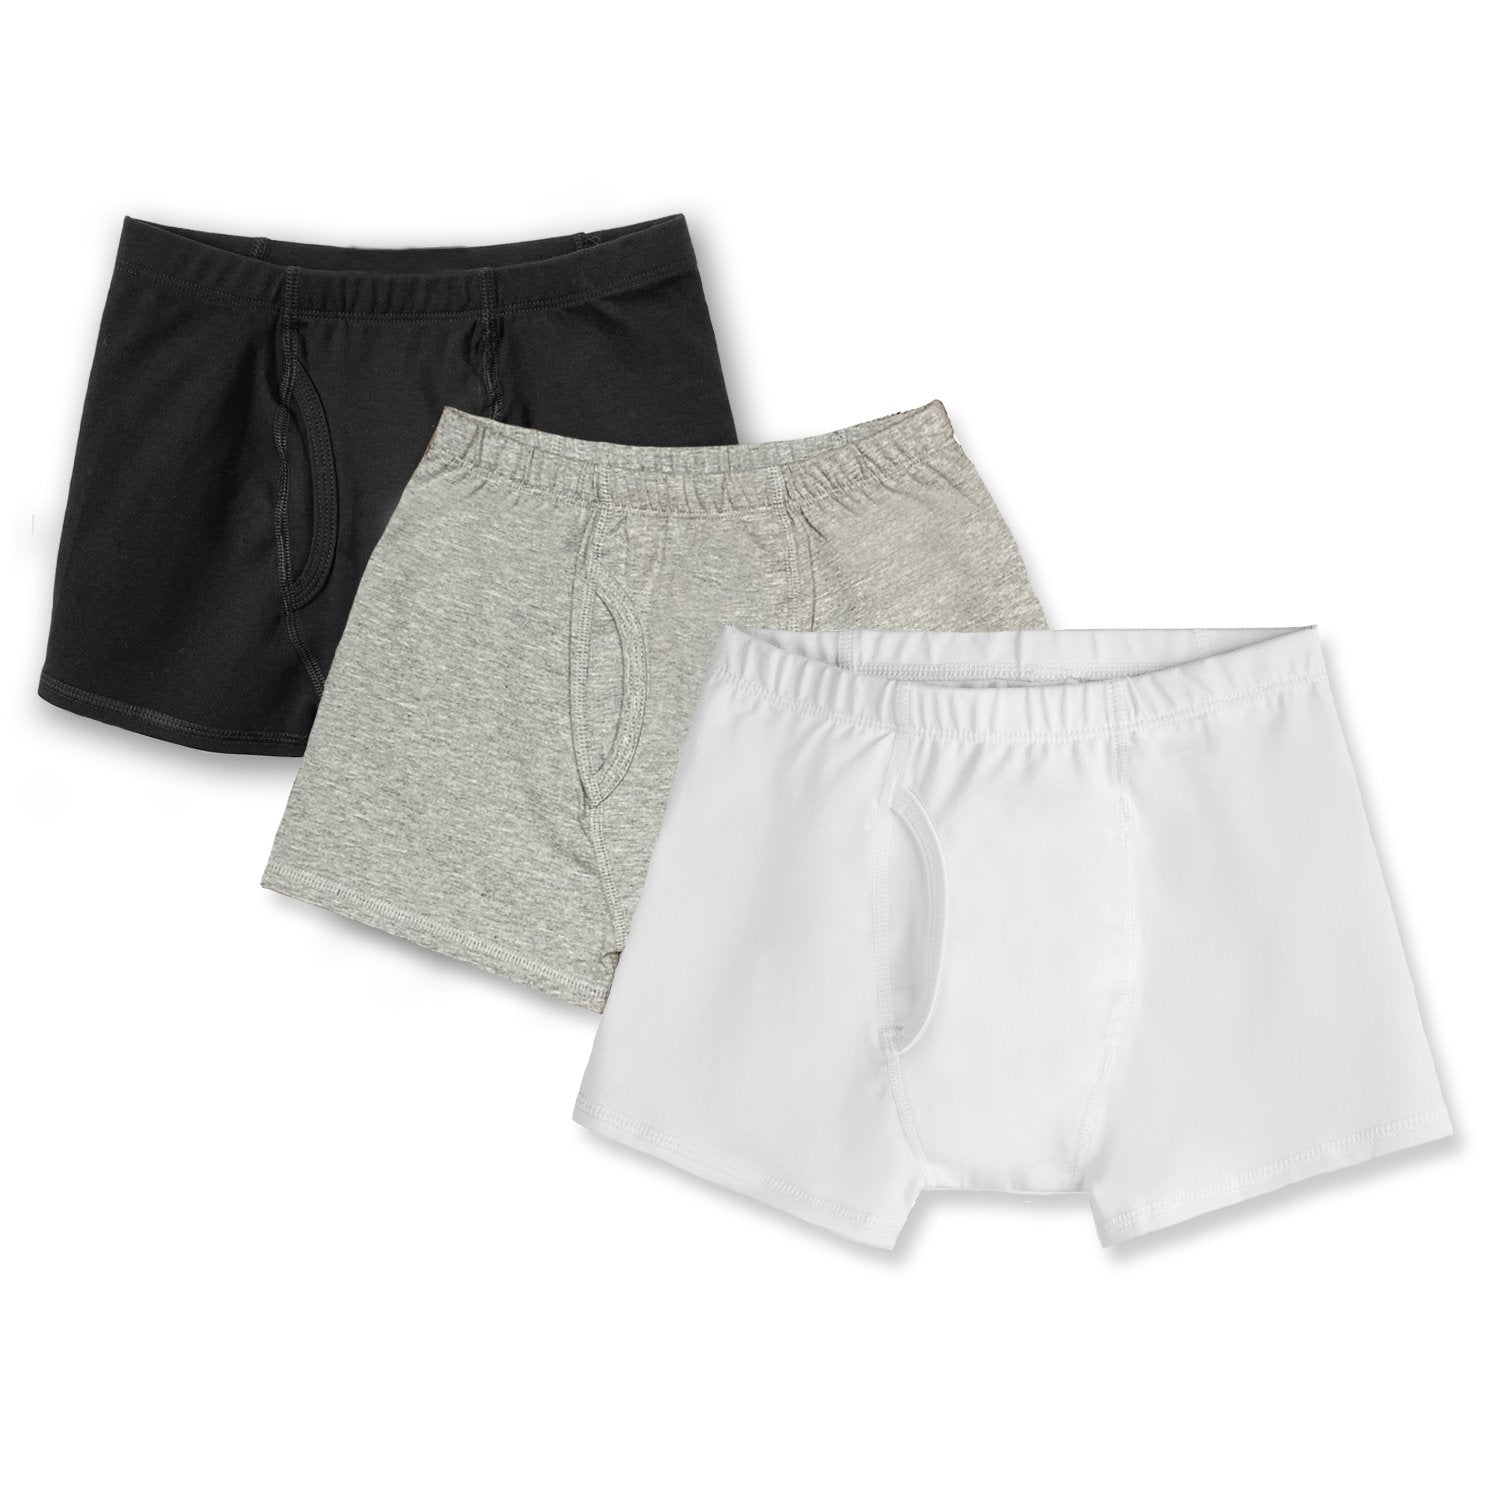 Men's Cotton Underwear Canada Organic Collection Launch 